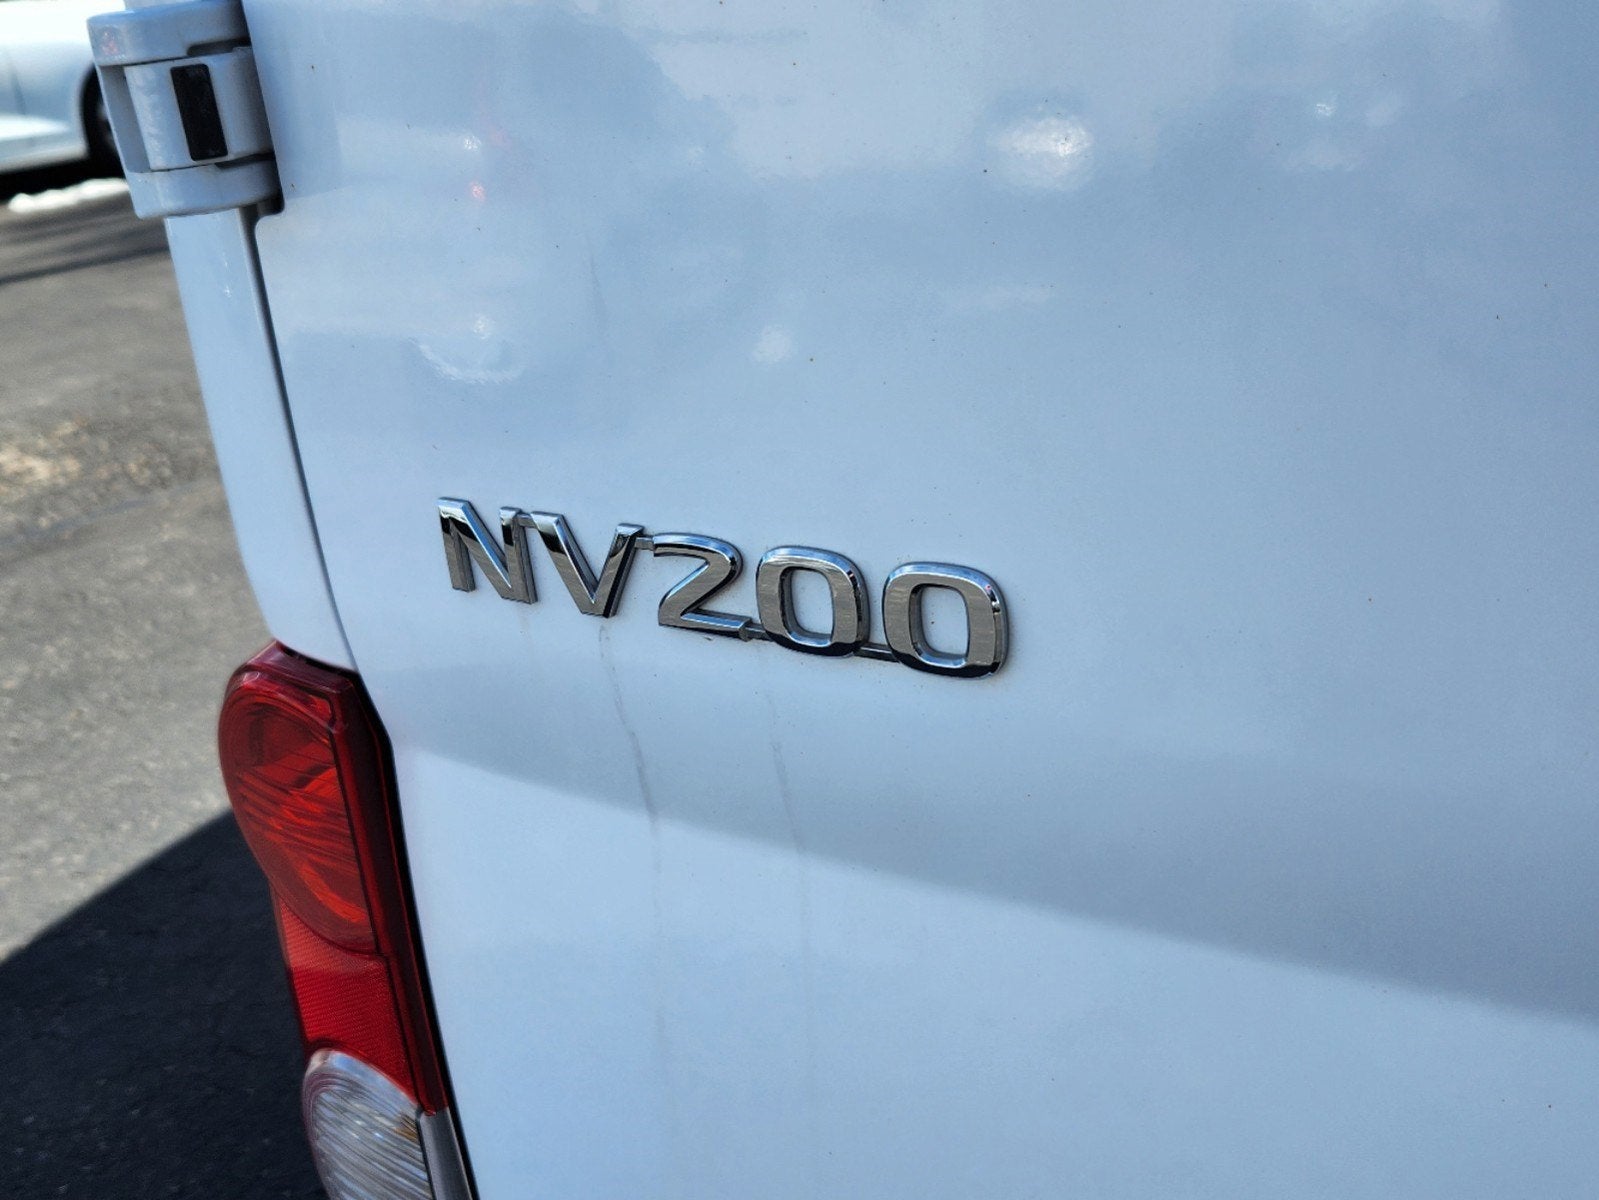 2018 Nissan NV200 Compact Cargo SV